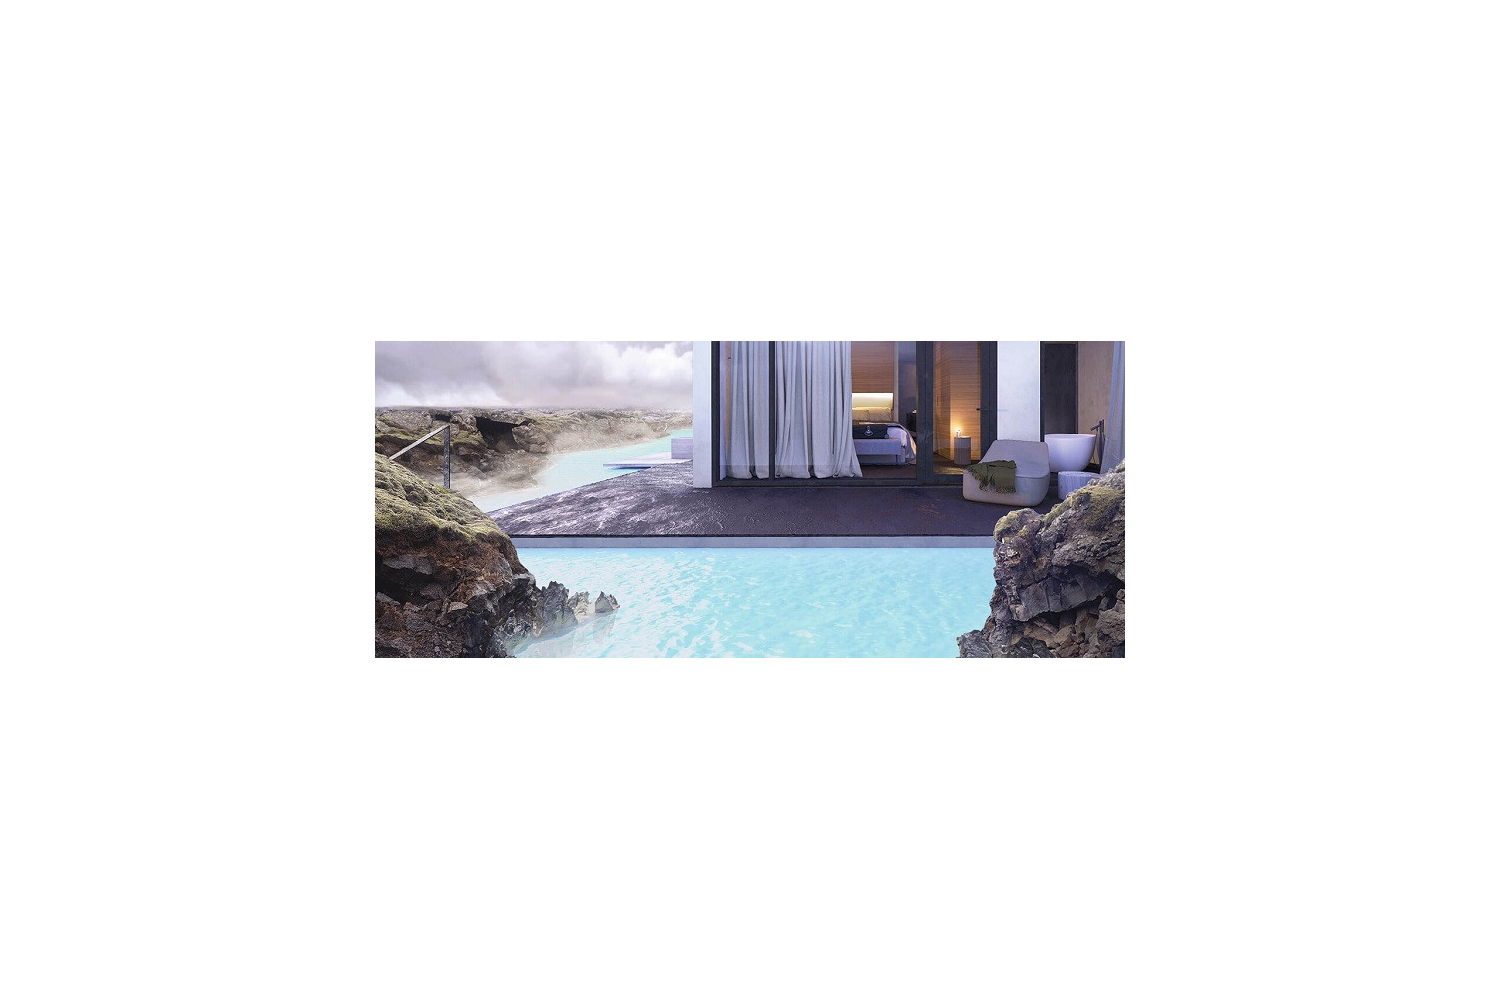 New Icelandic spa set to make waves this April